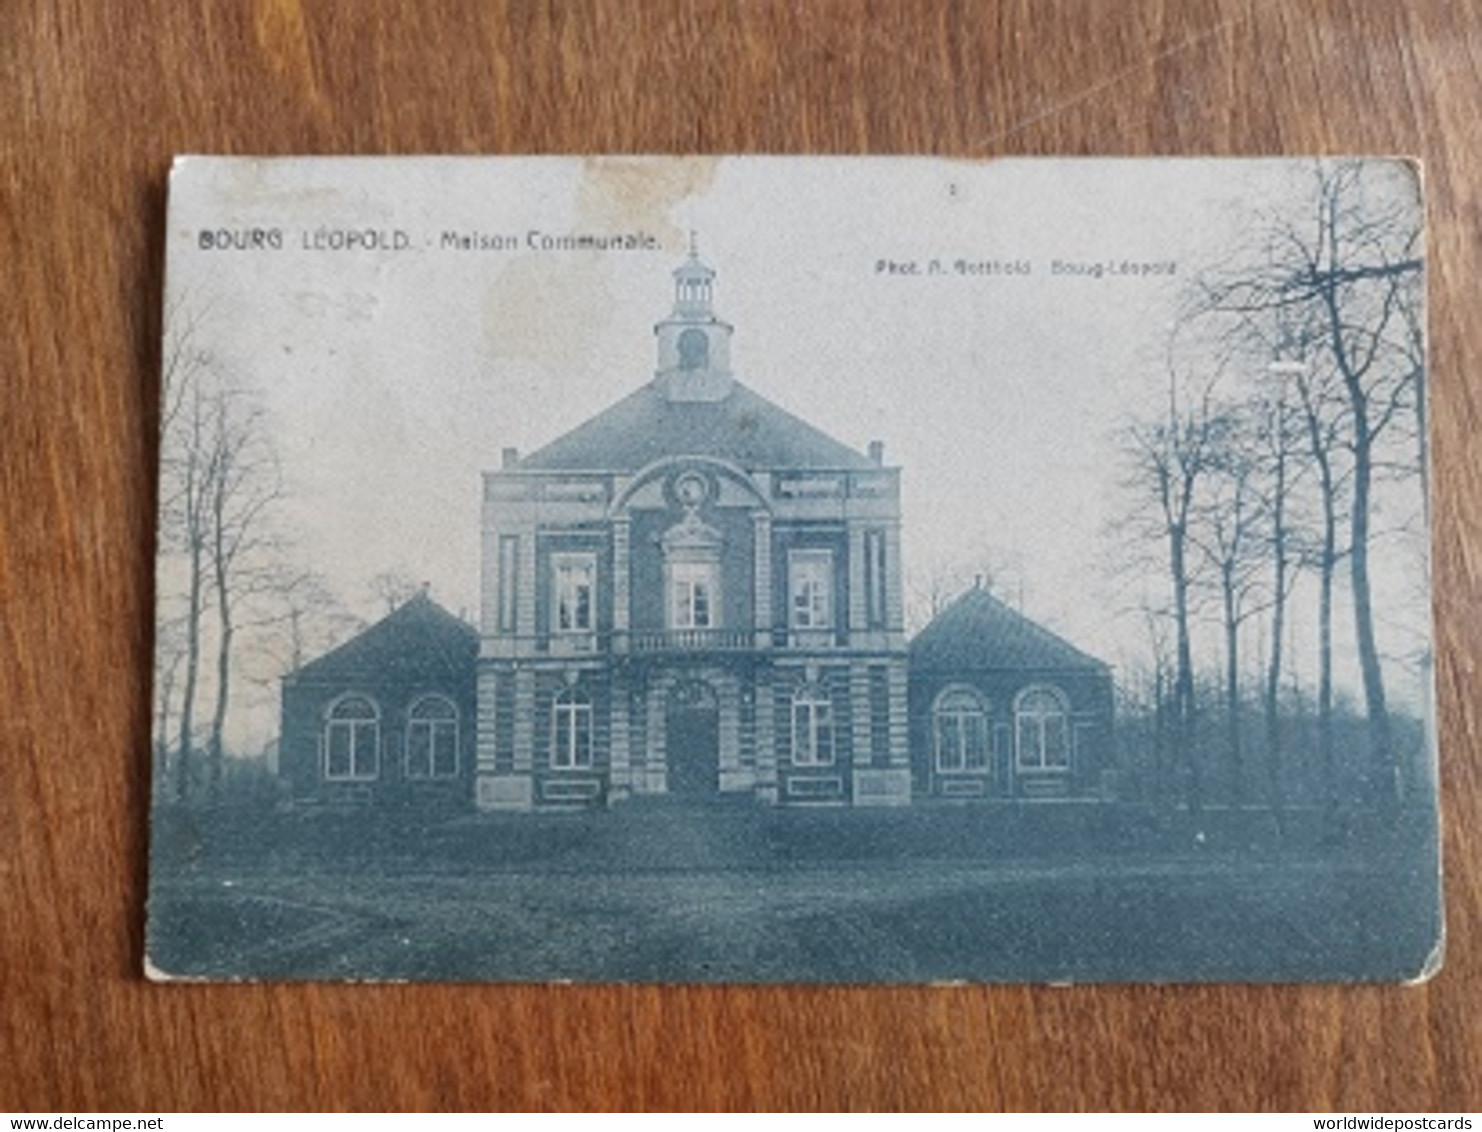 A1127 BOURG LEOPOLD LEOPOLDSBURG - MAISON COMMUNALE PHOTO GOTTHOLD CIRCULEE 1910 ? - Leopoldsburg